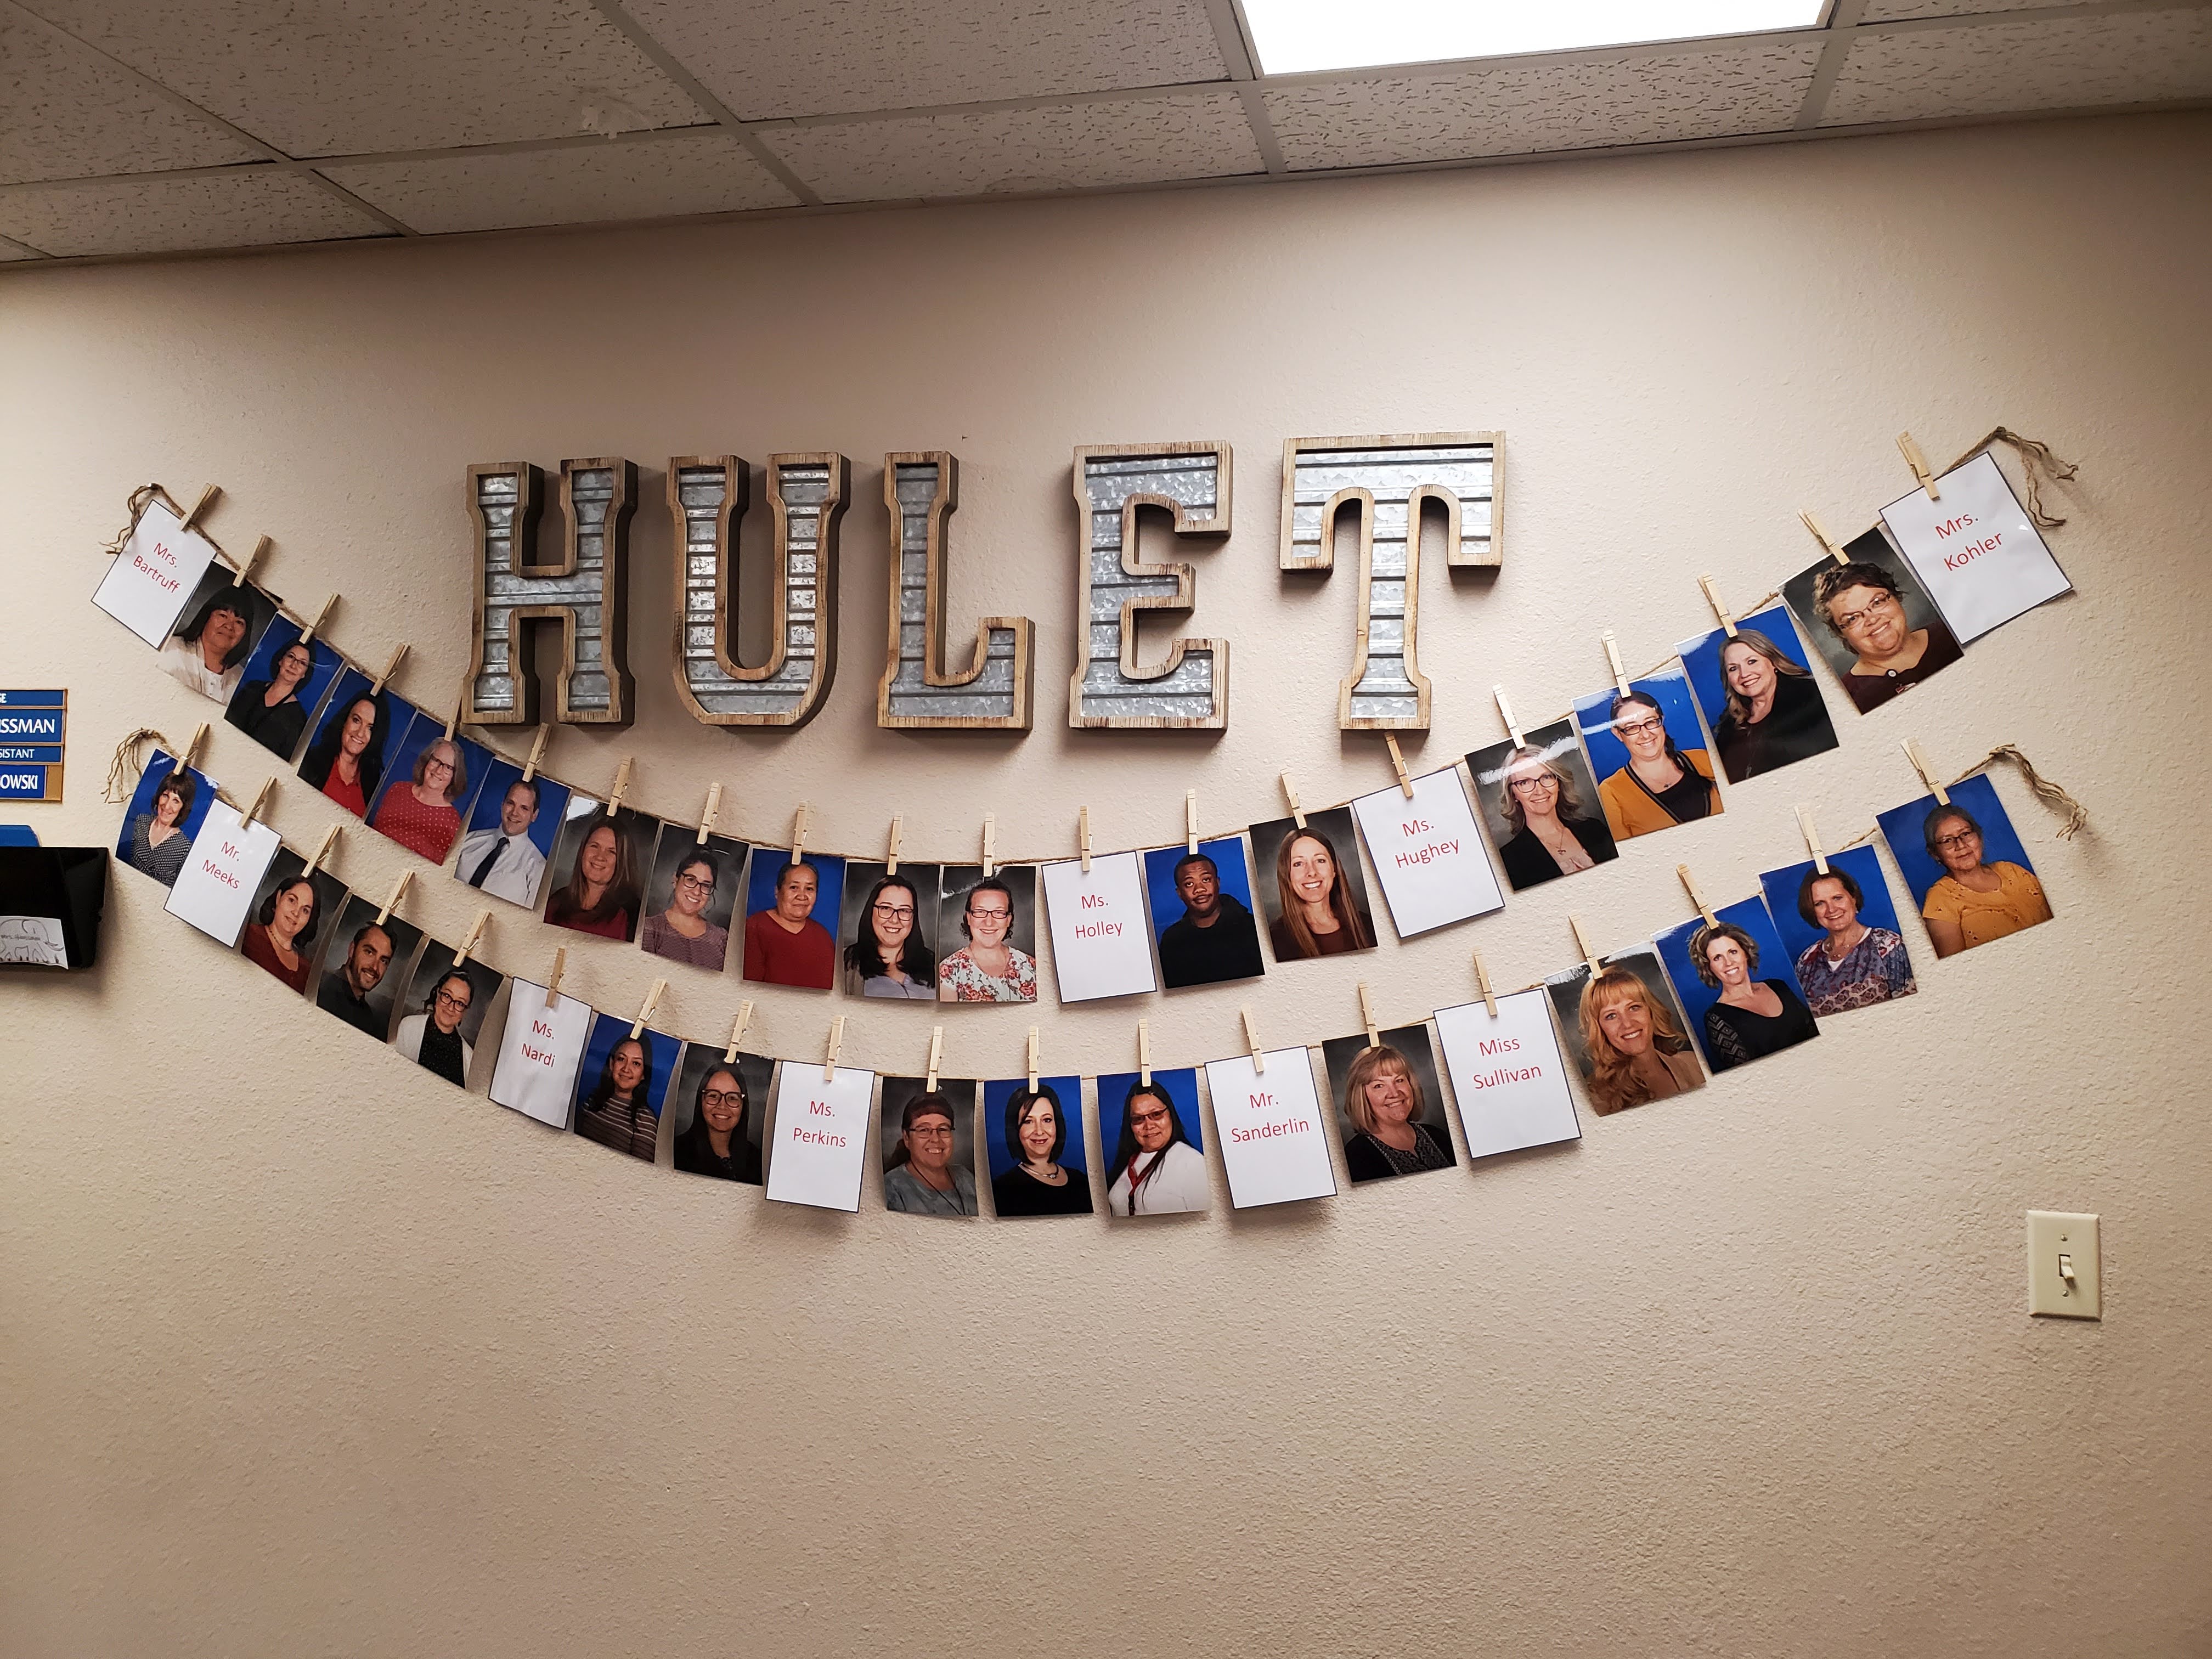 Hulet Staff